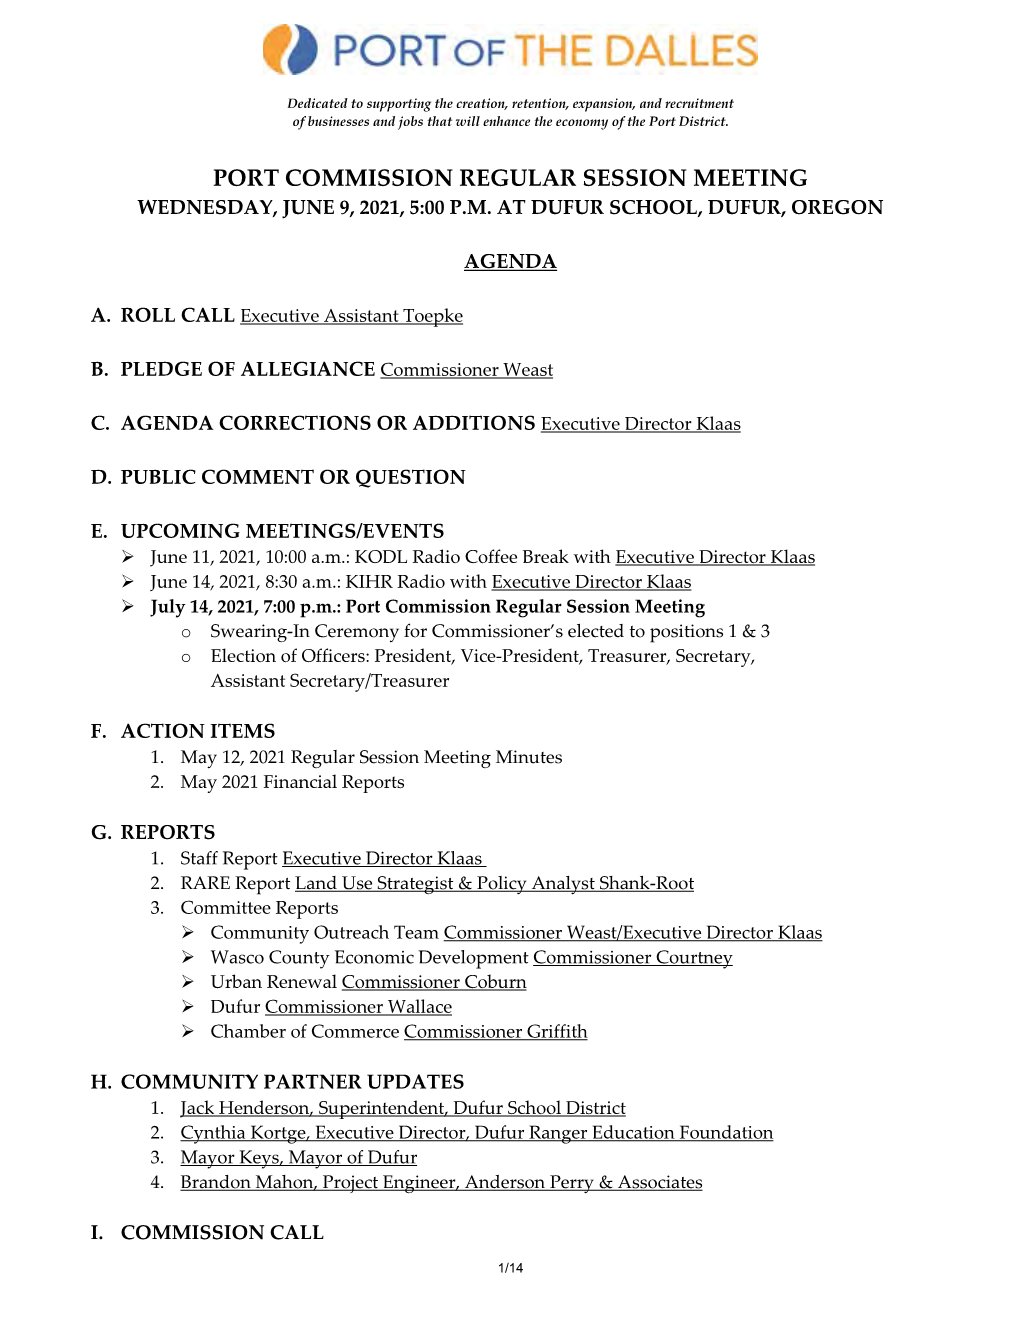 Port Commission Regular Session Meeting Wednesday, June 9, 2021, 5:00 P.M